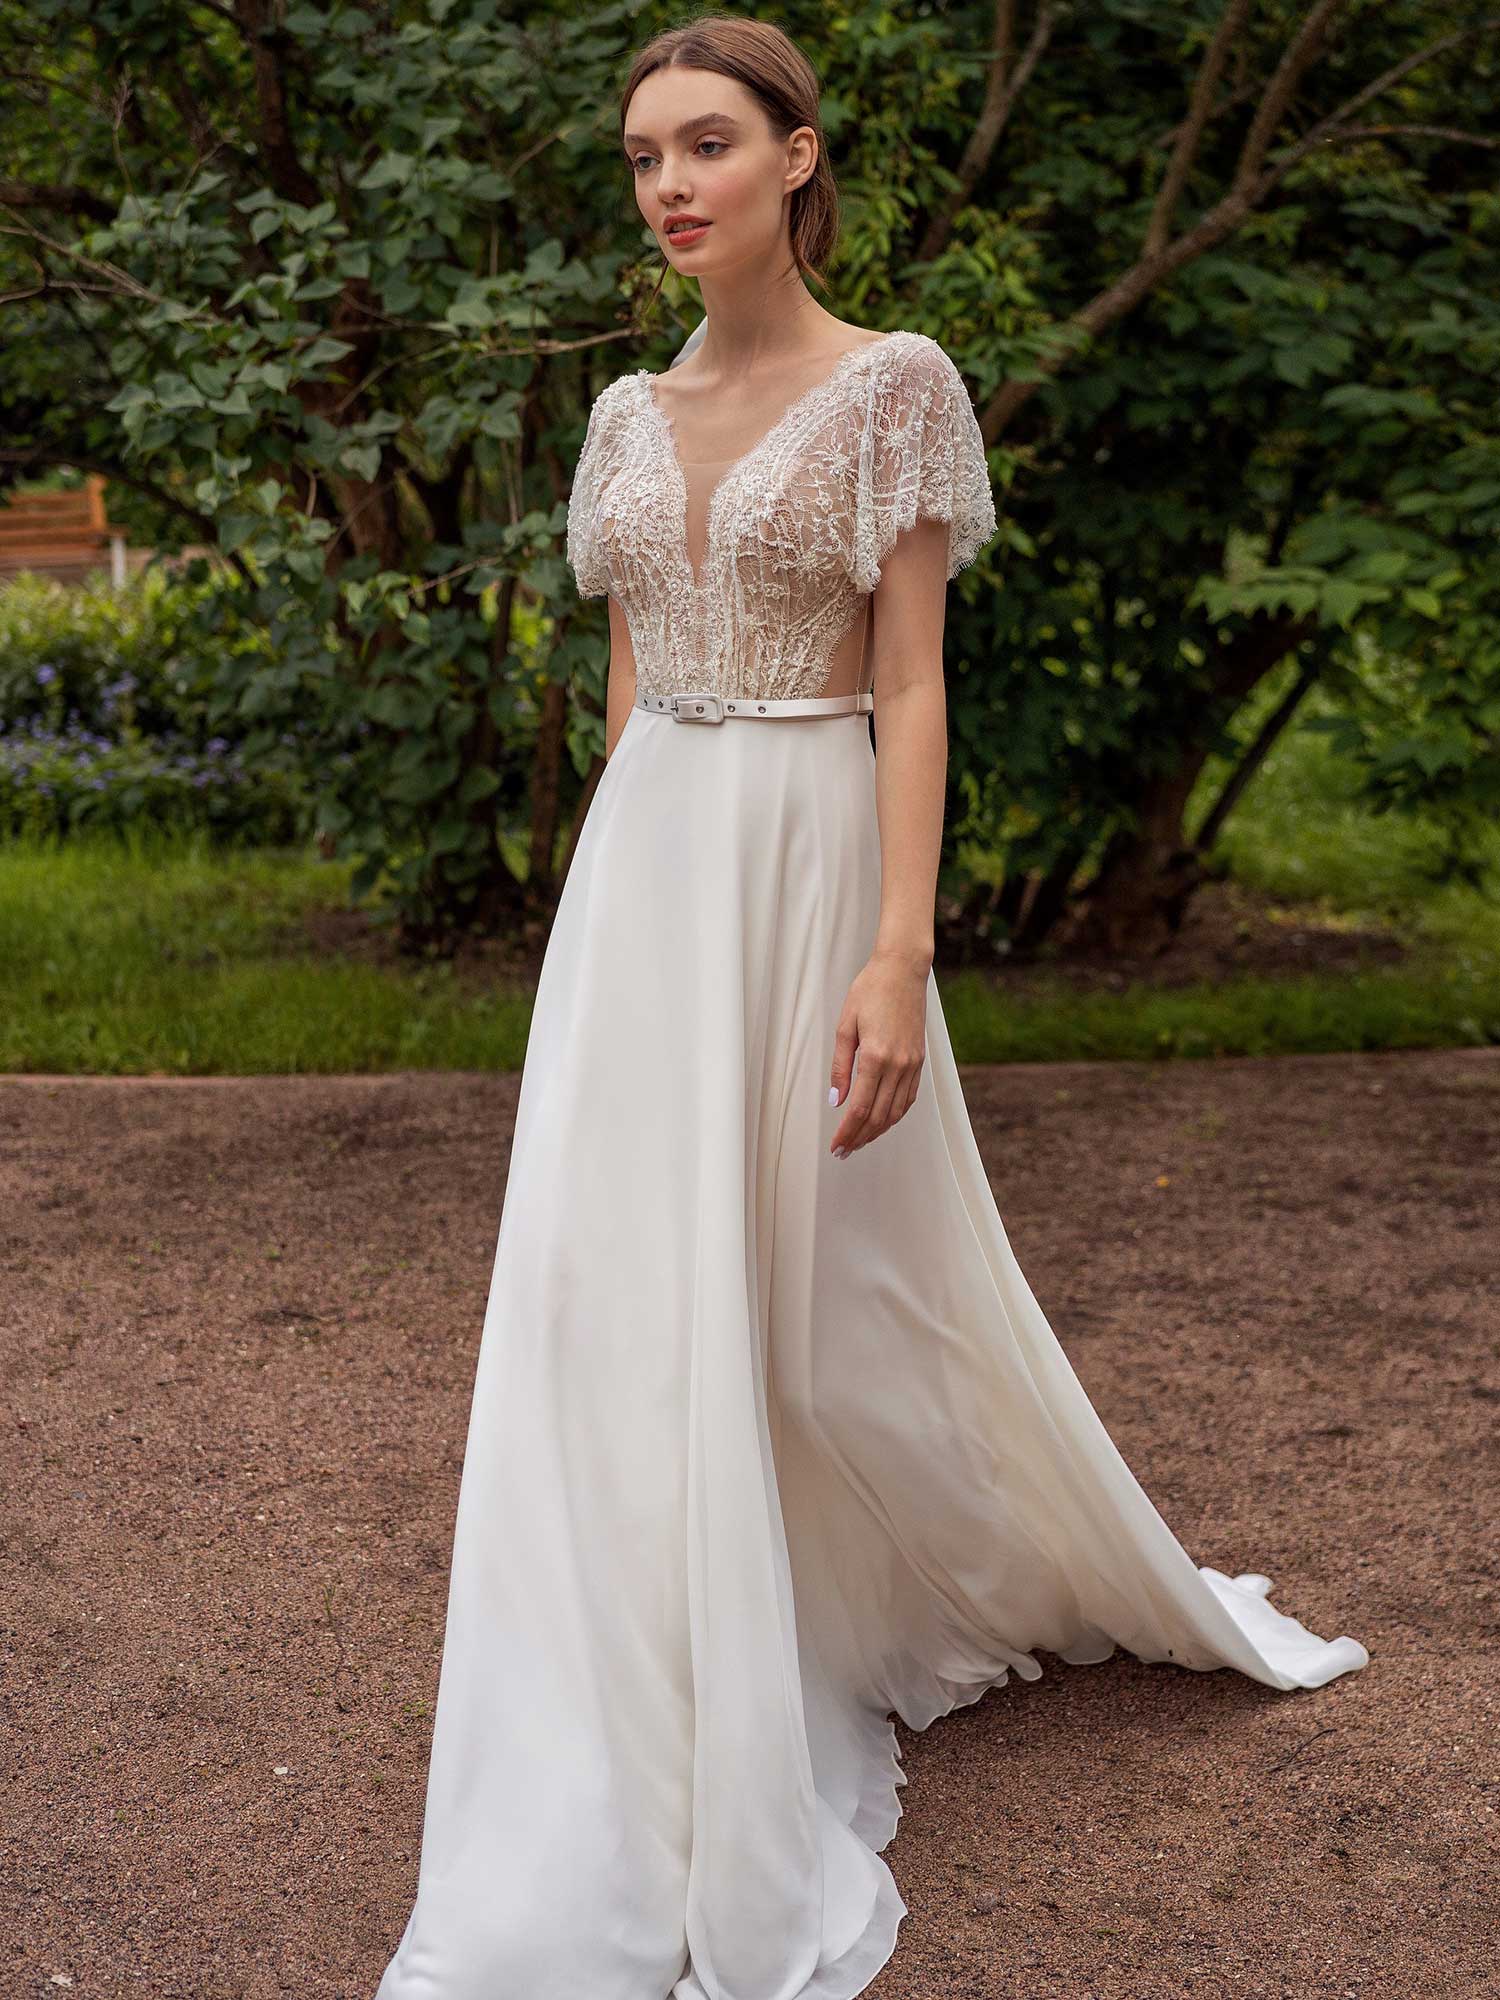 Cap sleeve sheath wedding dress with lace top and chiffon